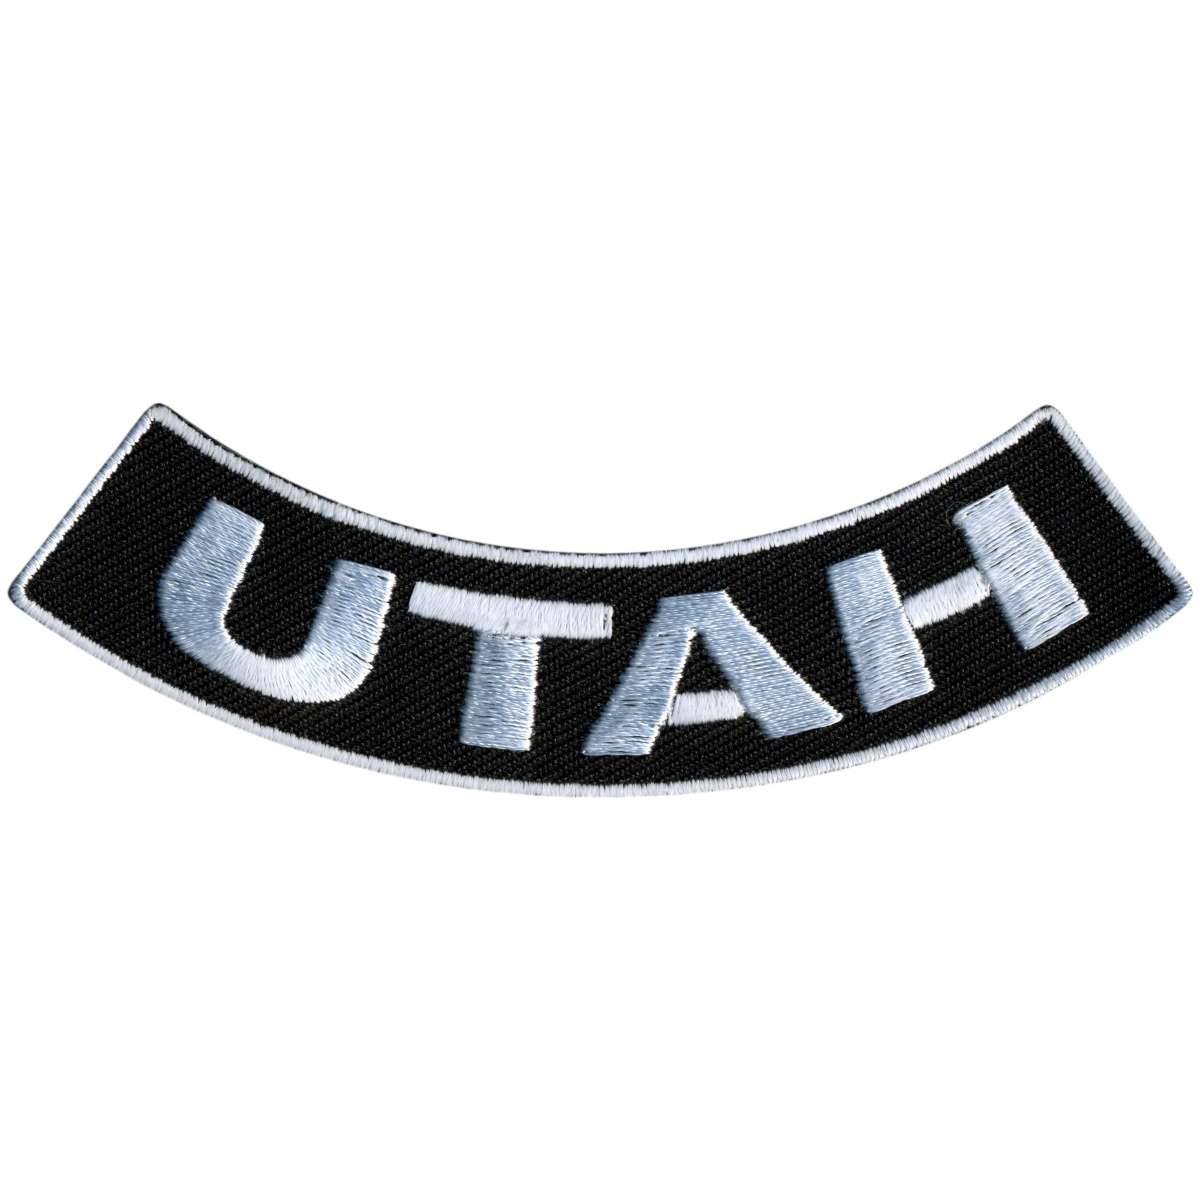 Hot Leathers Utah 4” X 1” Bottom Rocker Patch PPM5088